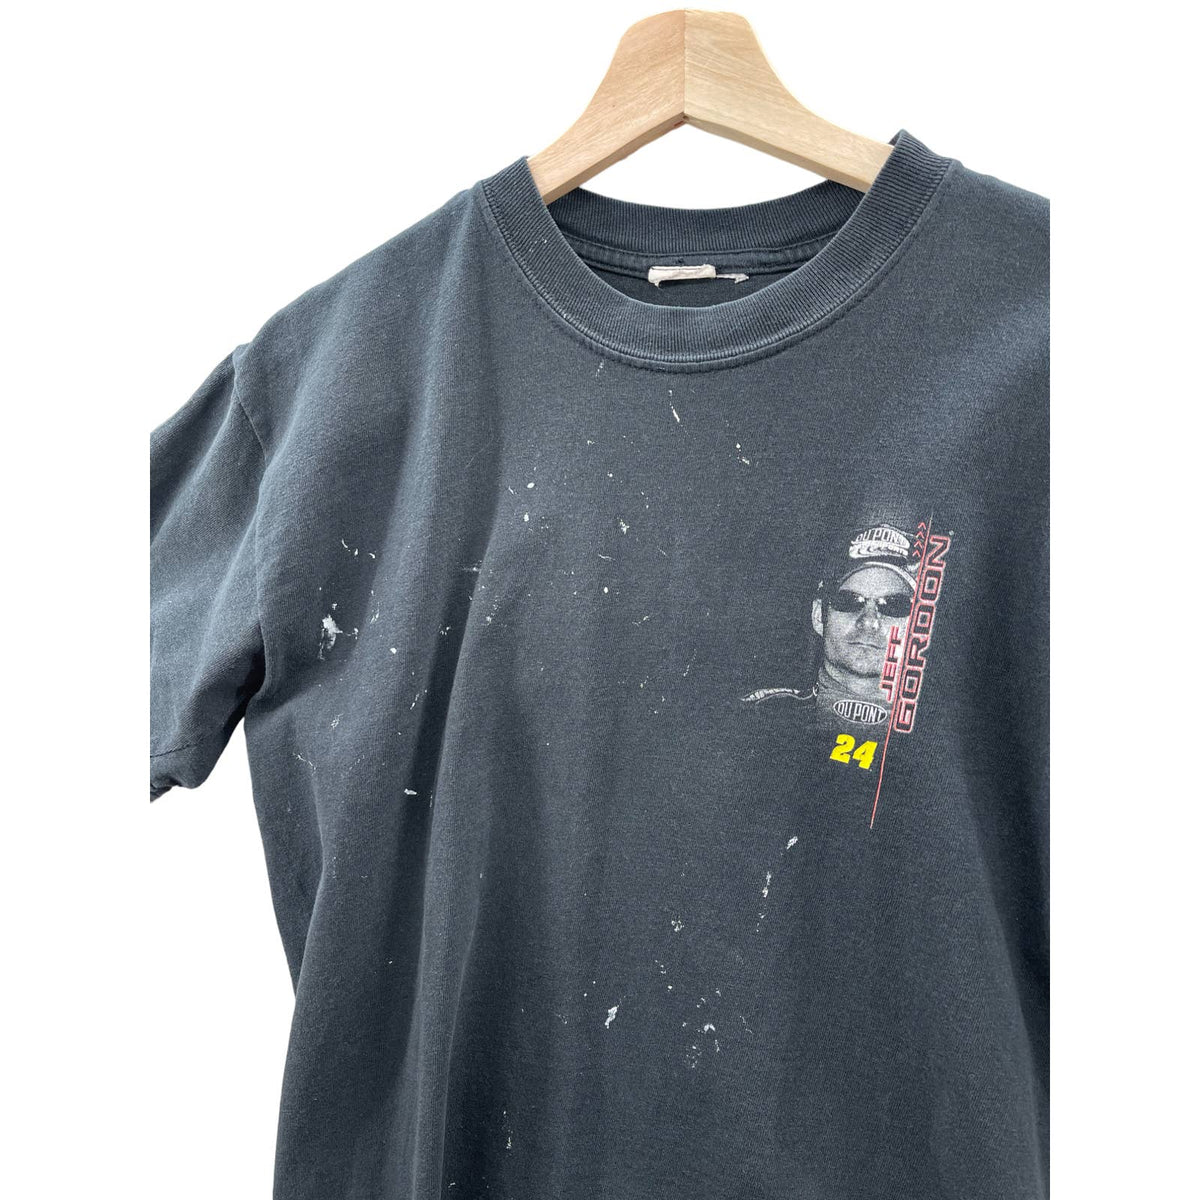 Vintage 2000's Jeff Gordon Nascar Racing Distressed Paint Splatter T-Shirt